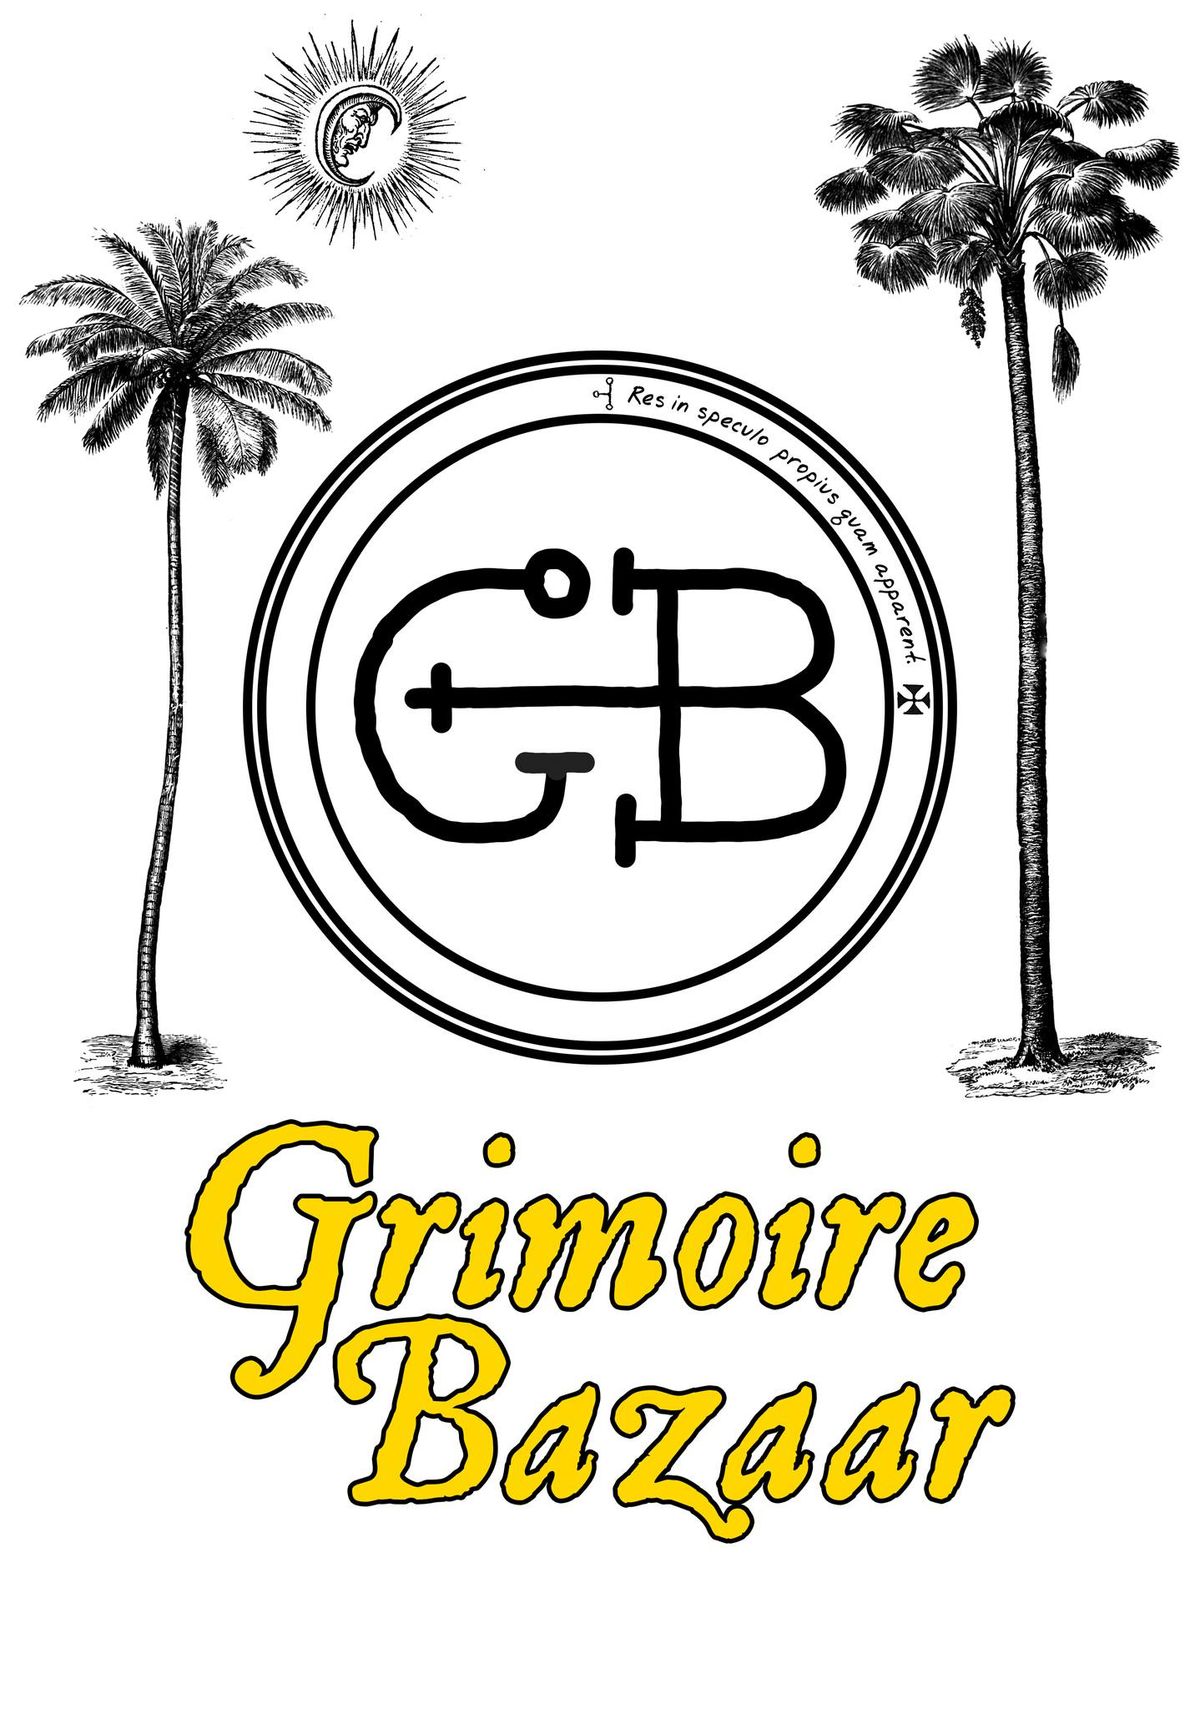 Grimoire Bazaar Save the Date!